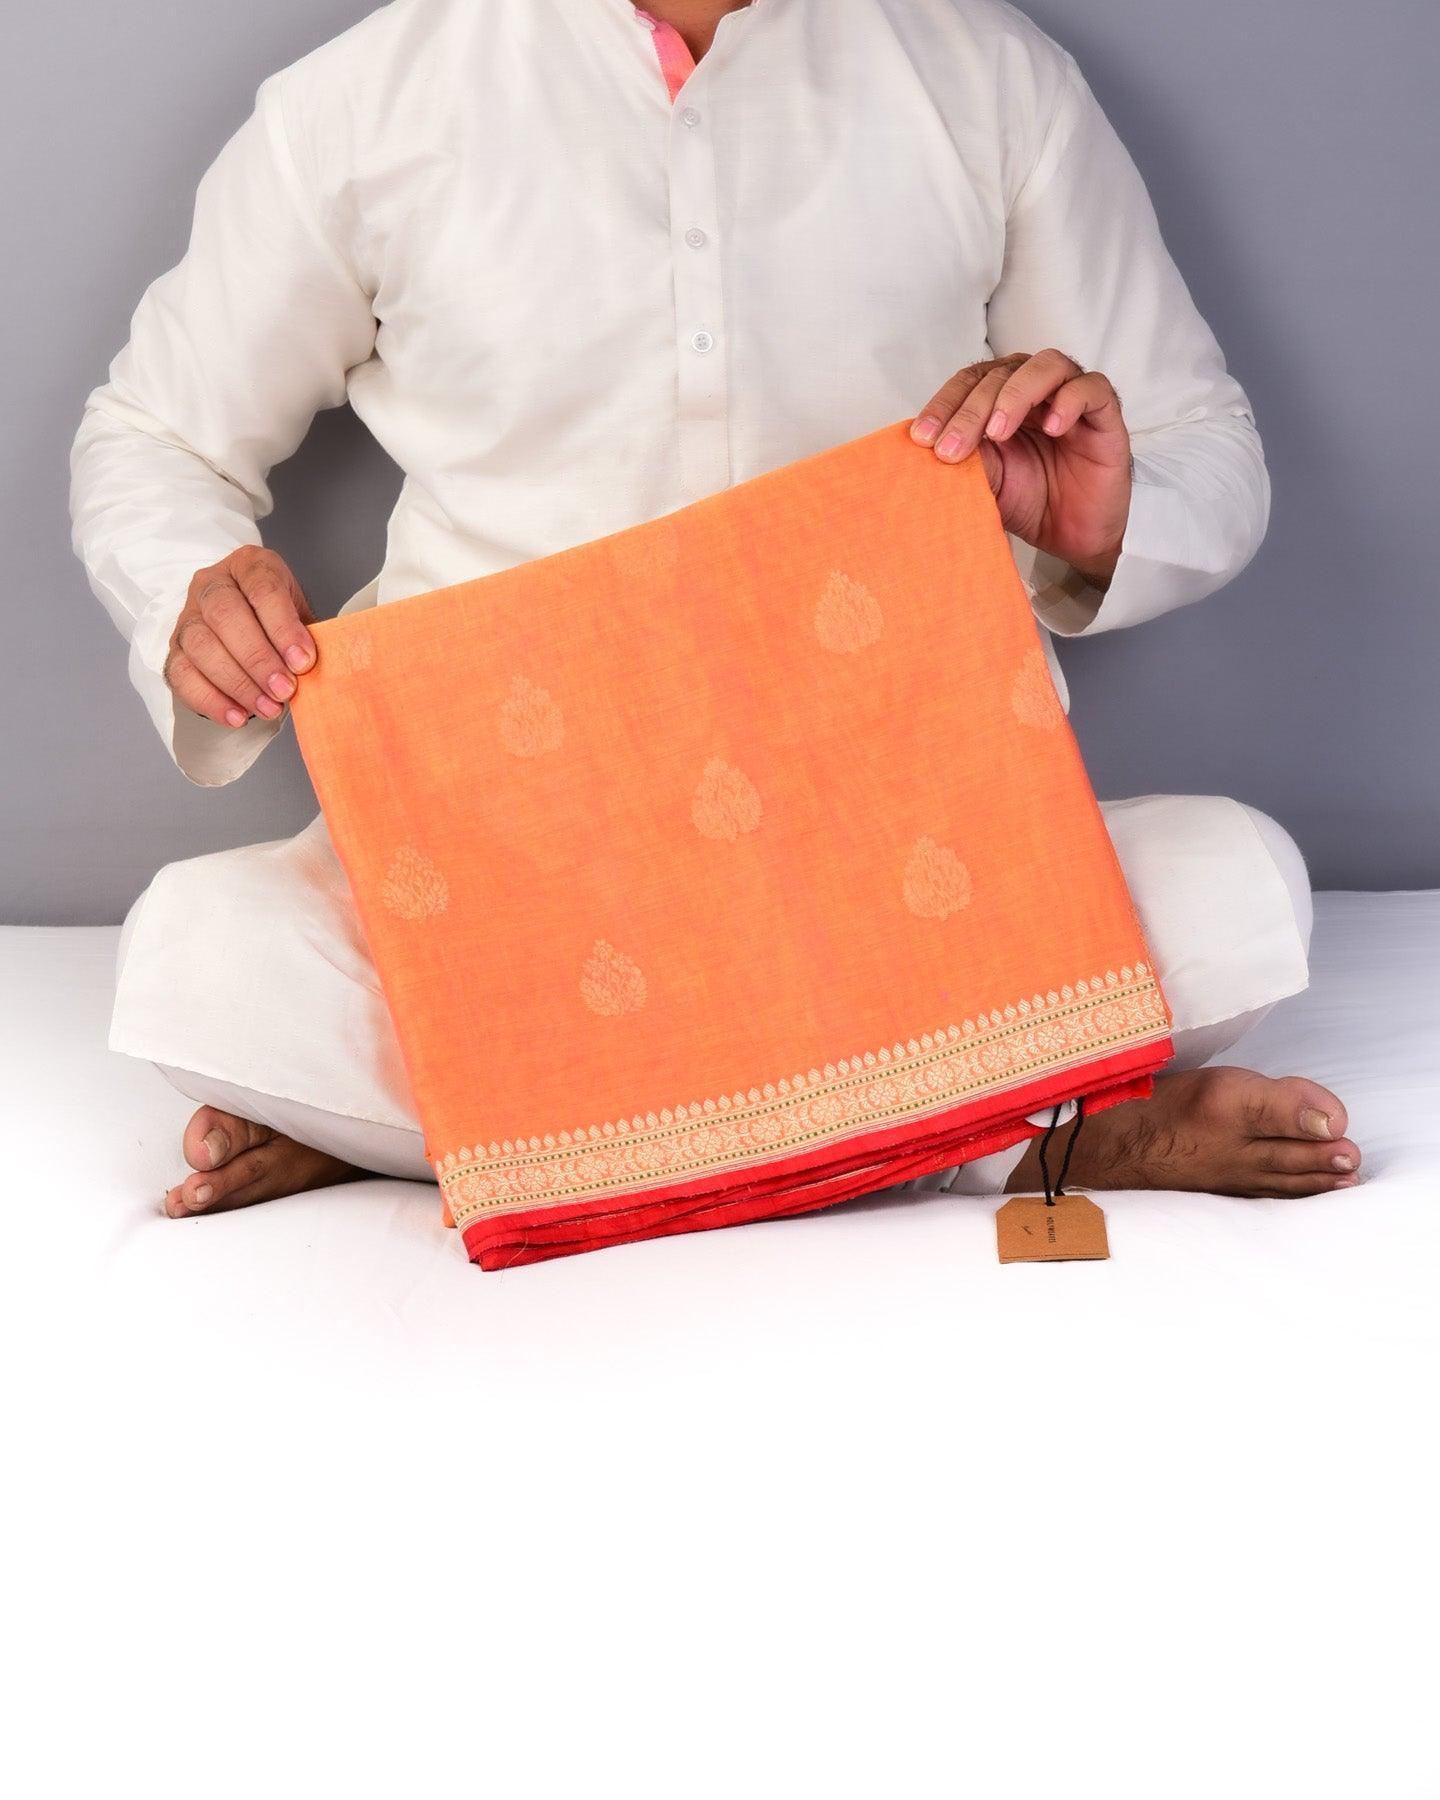 Sunny Orange Banarasi Buti Ektara Cutwork Brocade Handwoven Cotton Saree - By HolyWeaves, Benares